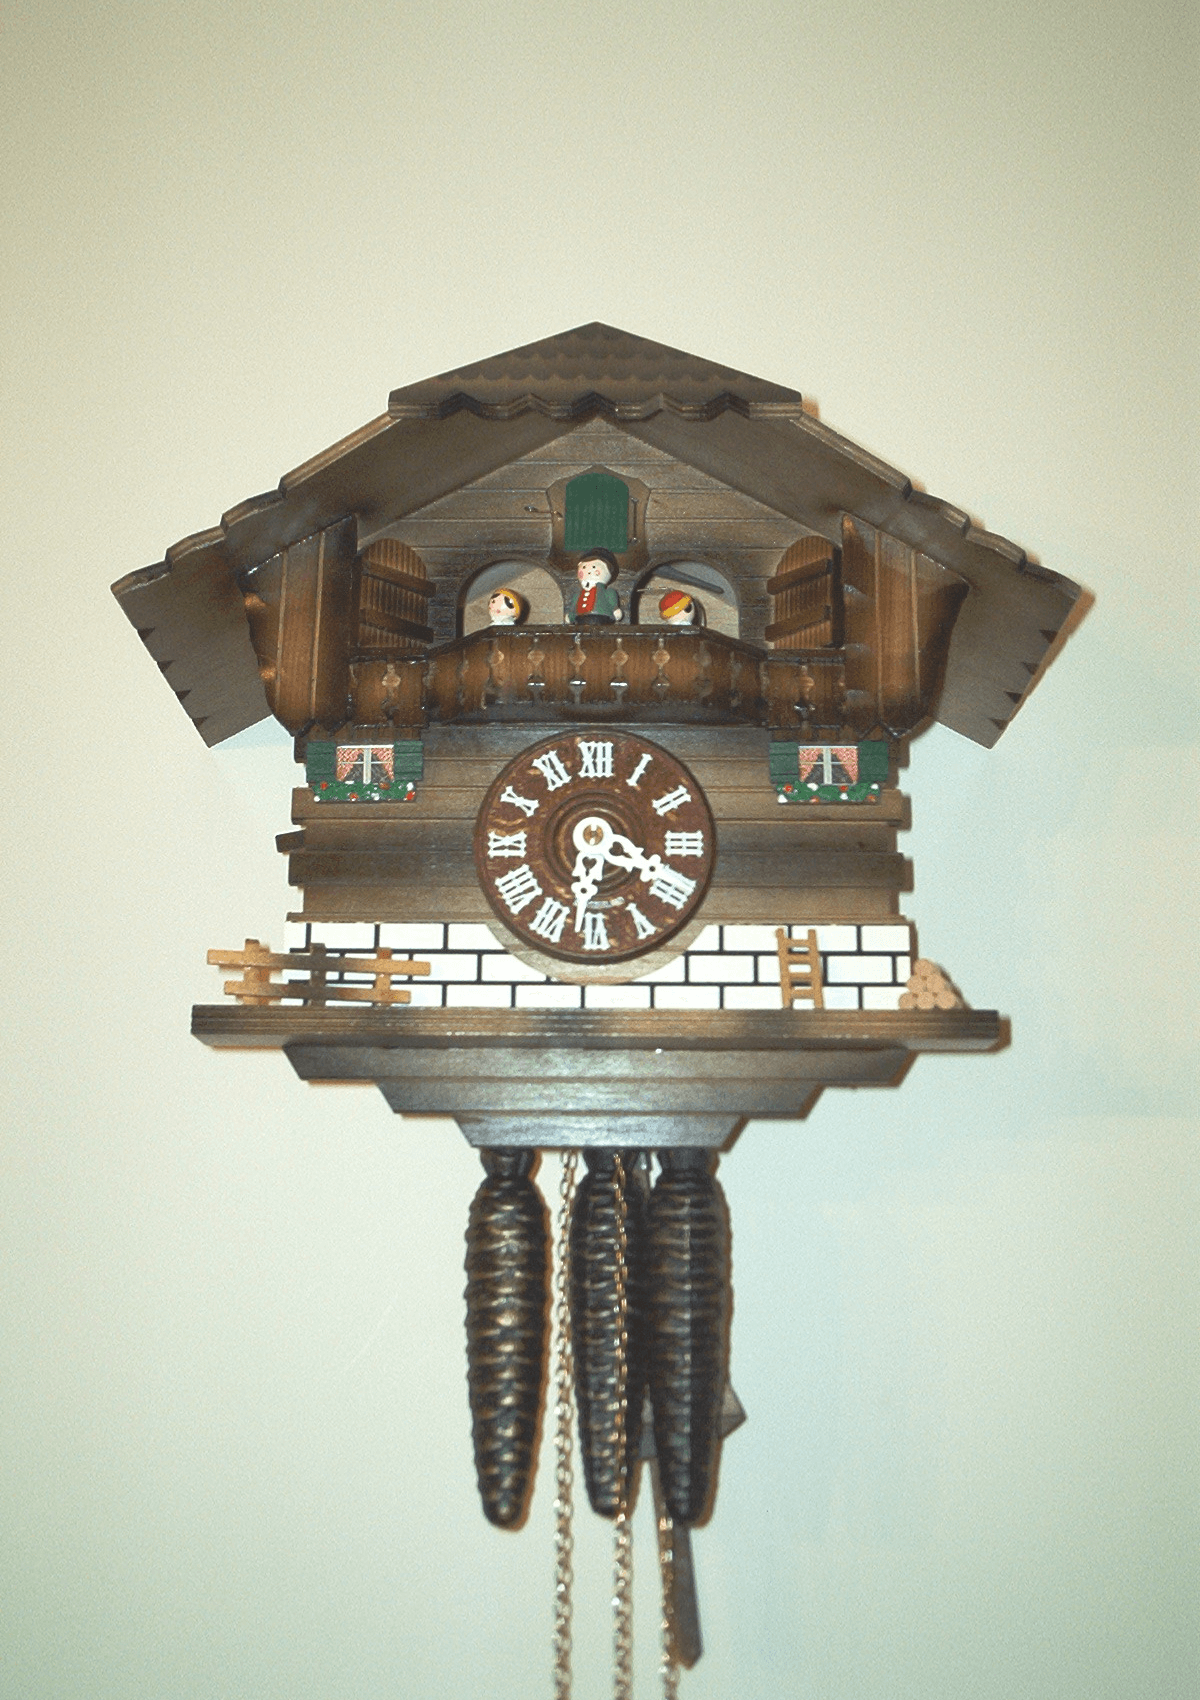 Swiss cuckoo clocks are unique souvenir ideas from Switzerland